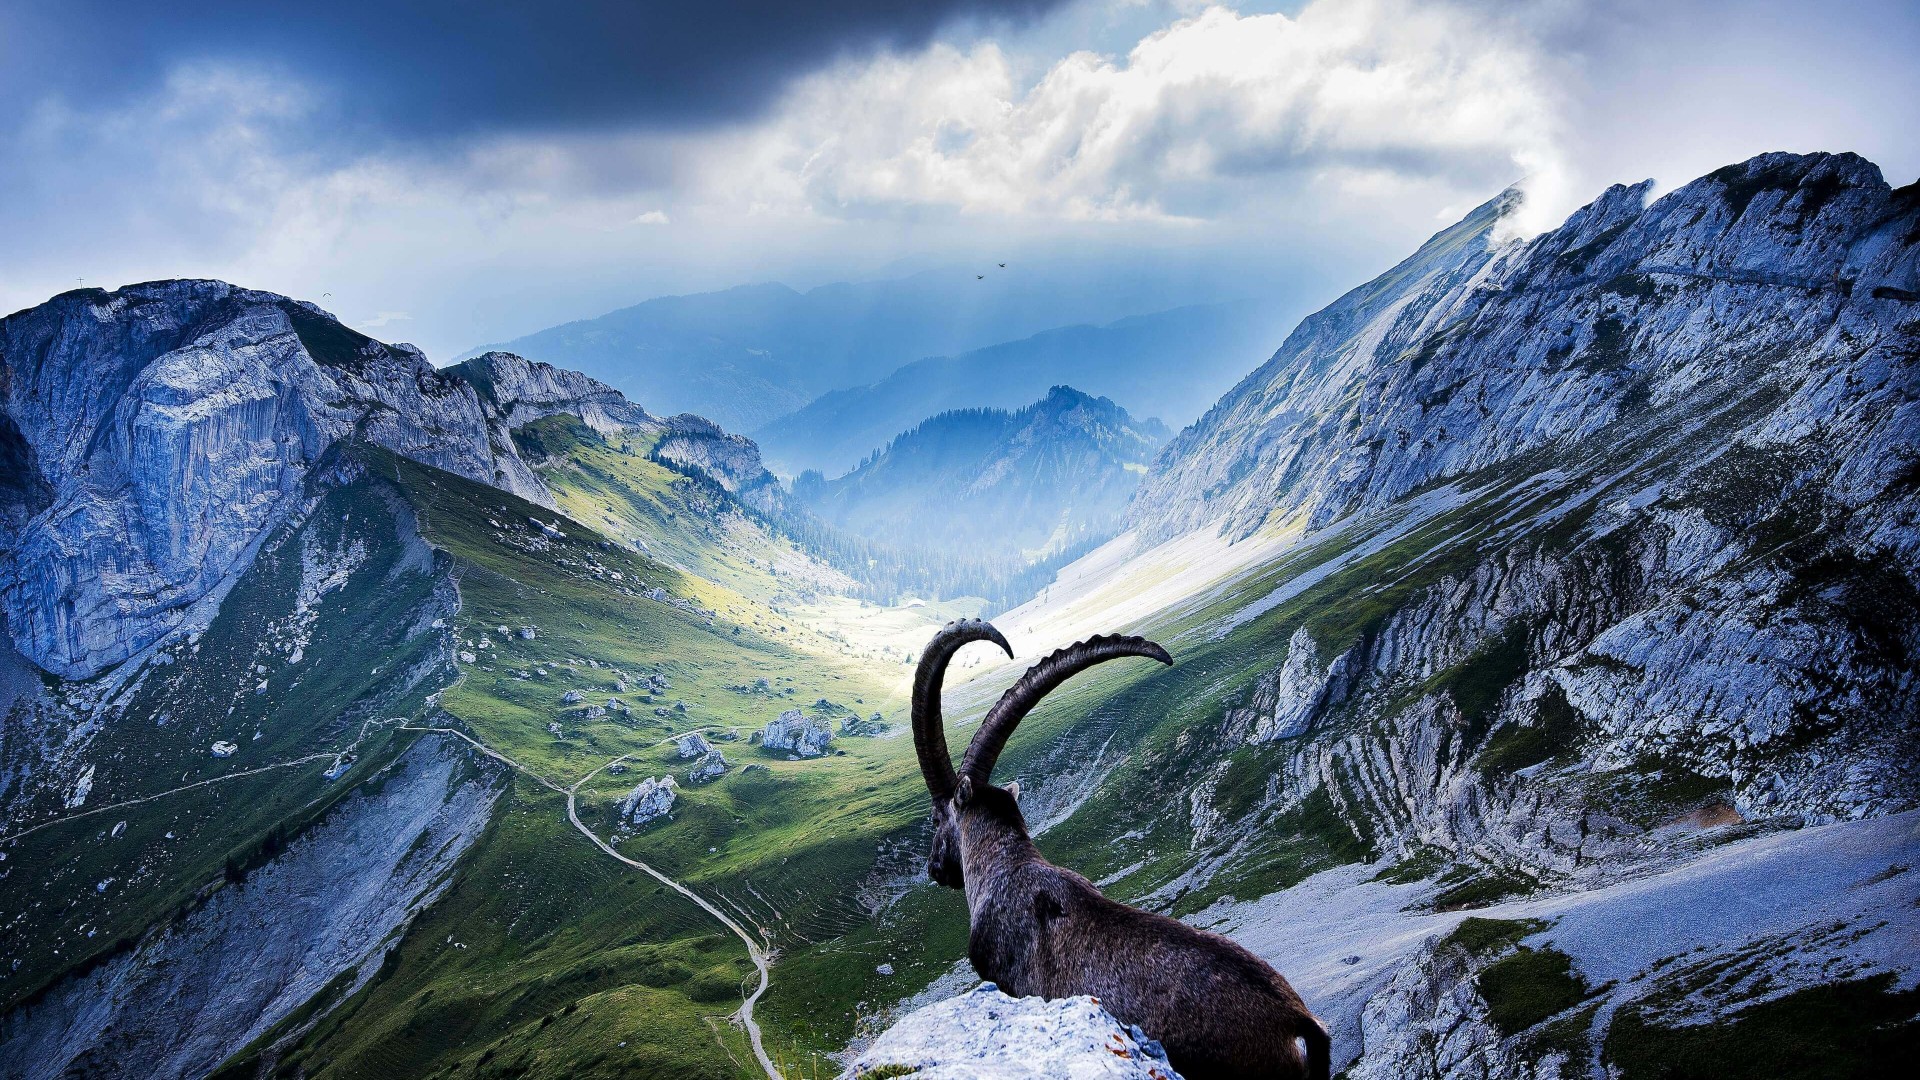 Goat at Pilatus, Switzerland Wallpaper for Desktop 1920x1080